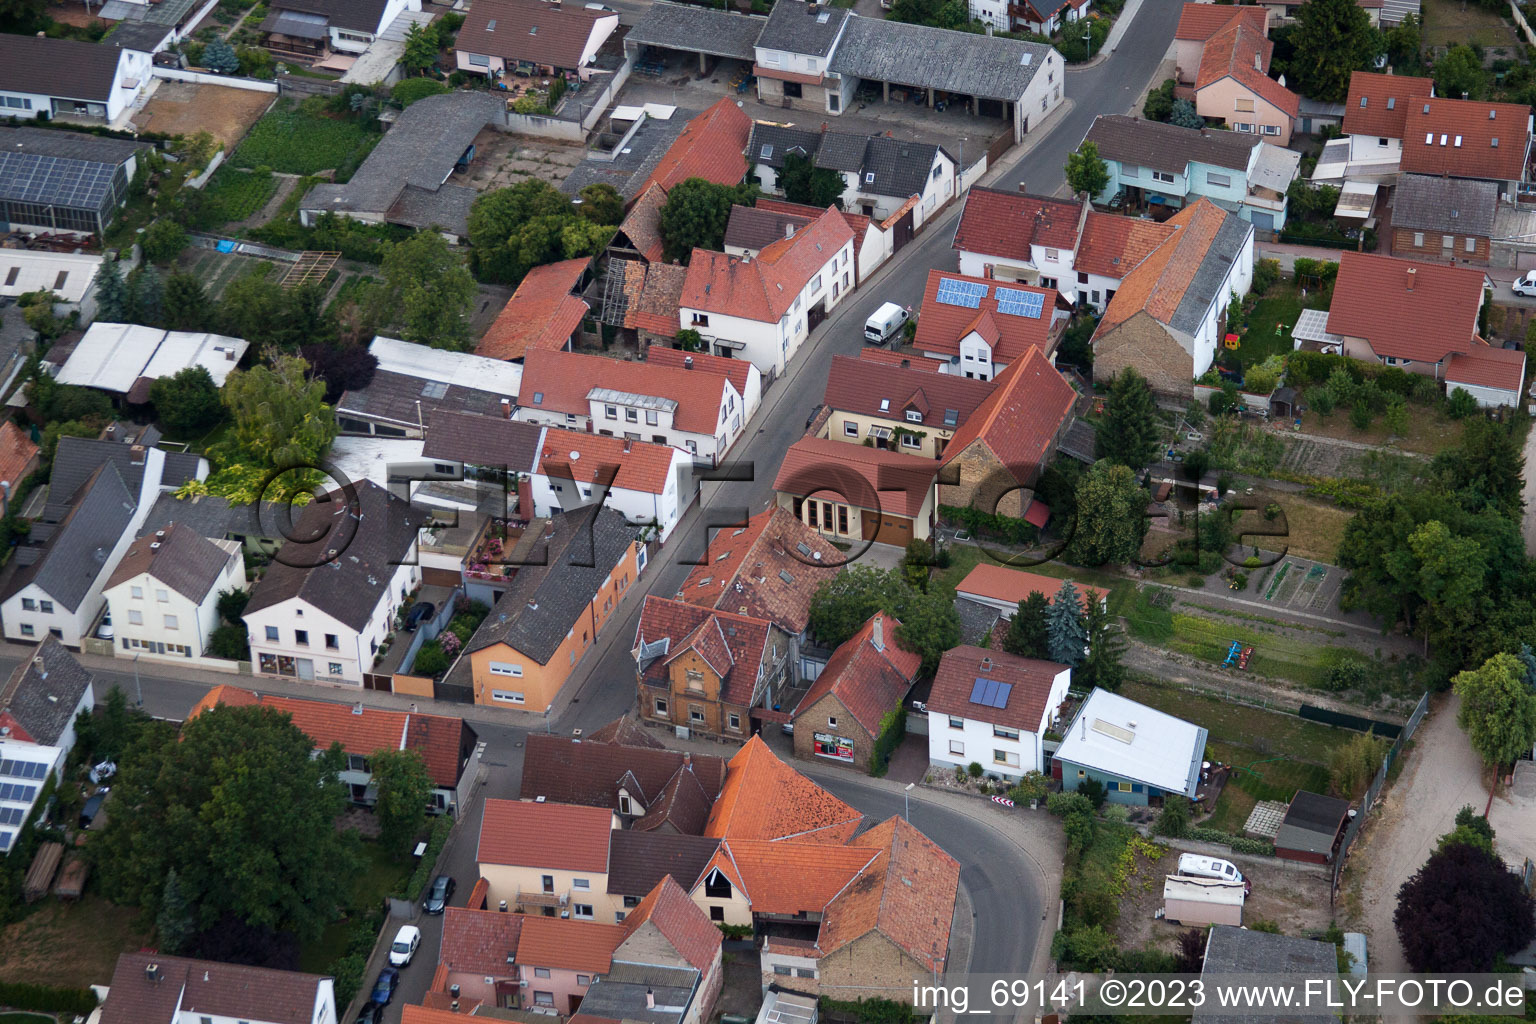 District Bobenheim in Bobenheim-Roxheim in the state Rhineland-Palatinate, Germany seen from above